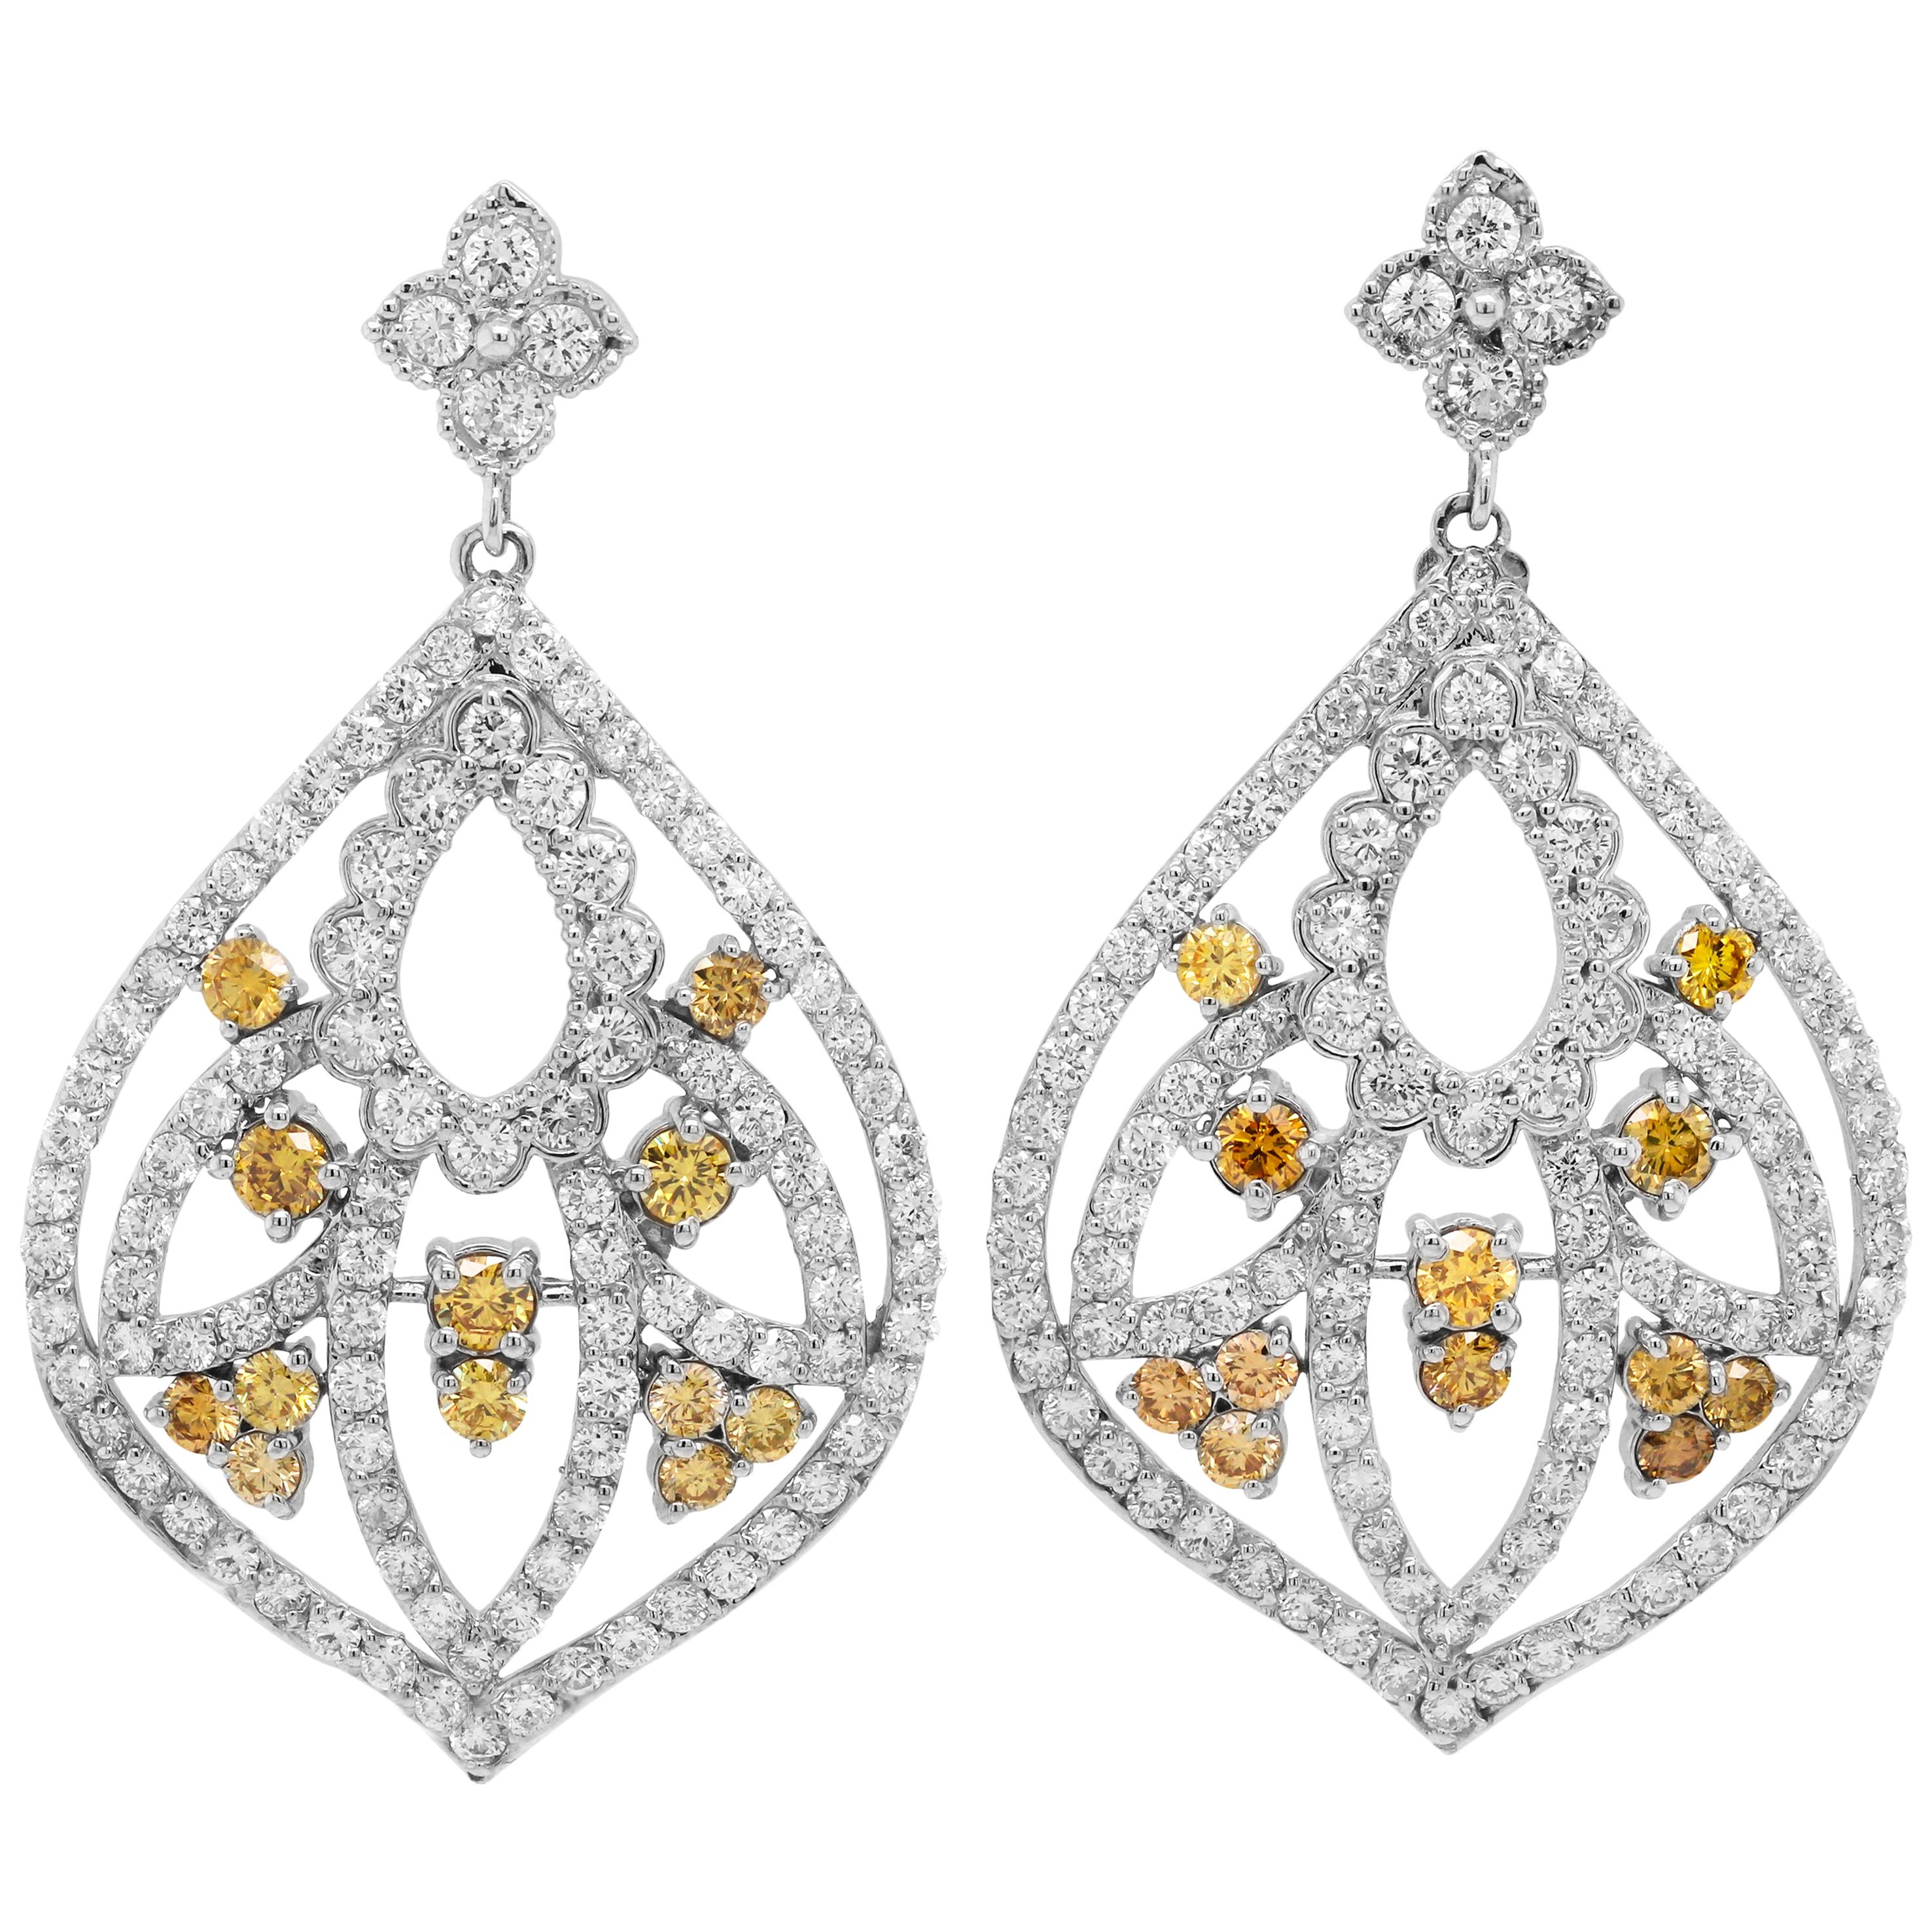 Stambolian Canary Yellow and White Diamond 18 Karat Gold Chandelier Earrings